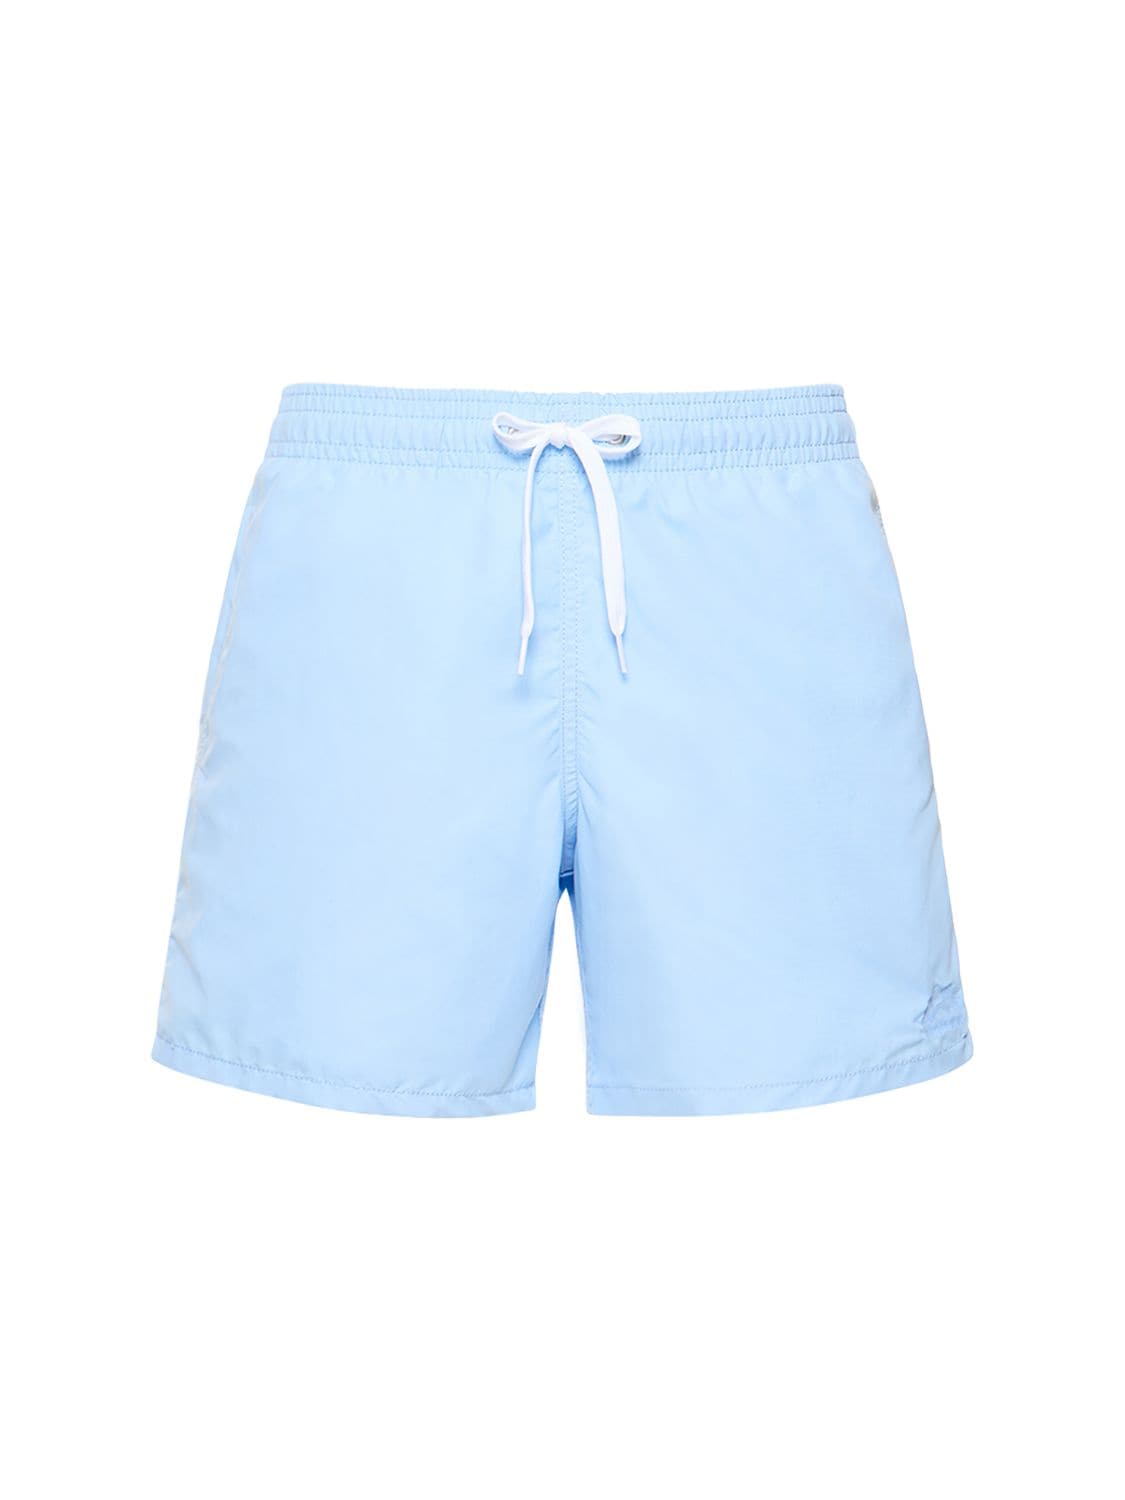 Sundek Stretch Waist Soft Nylon Swim Shorts In Teapot Blue